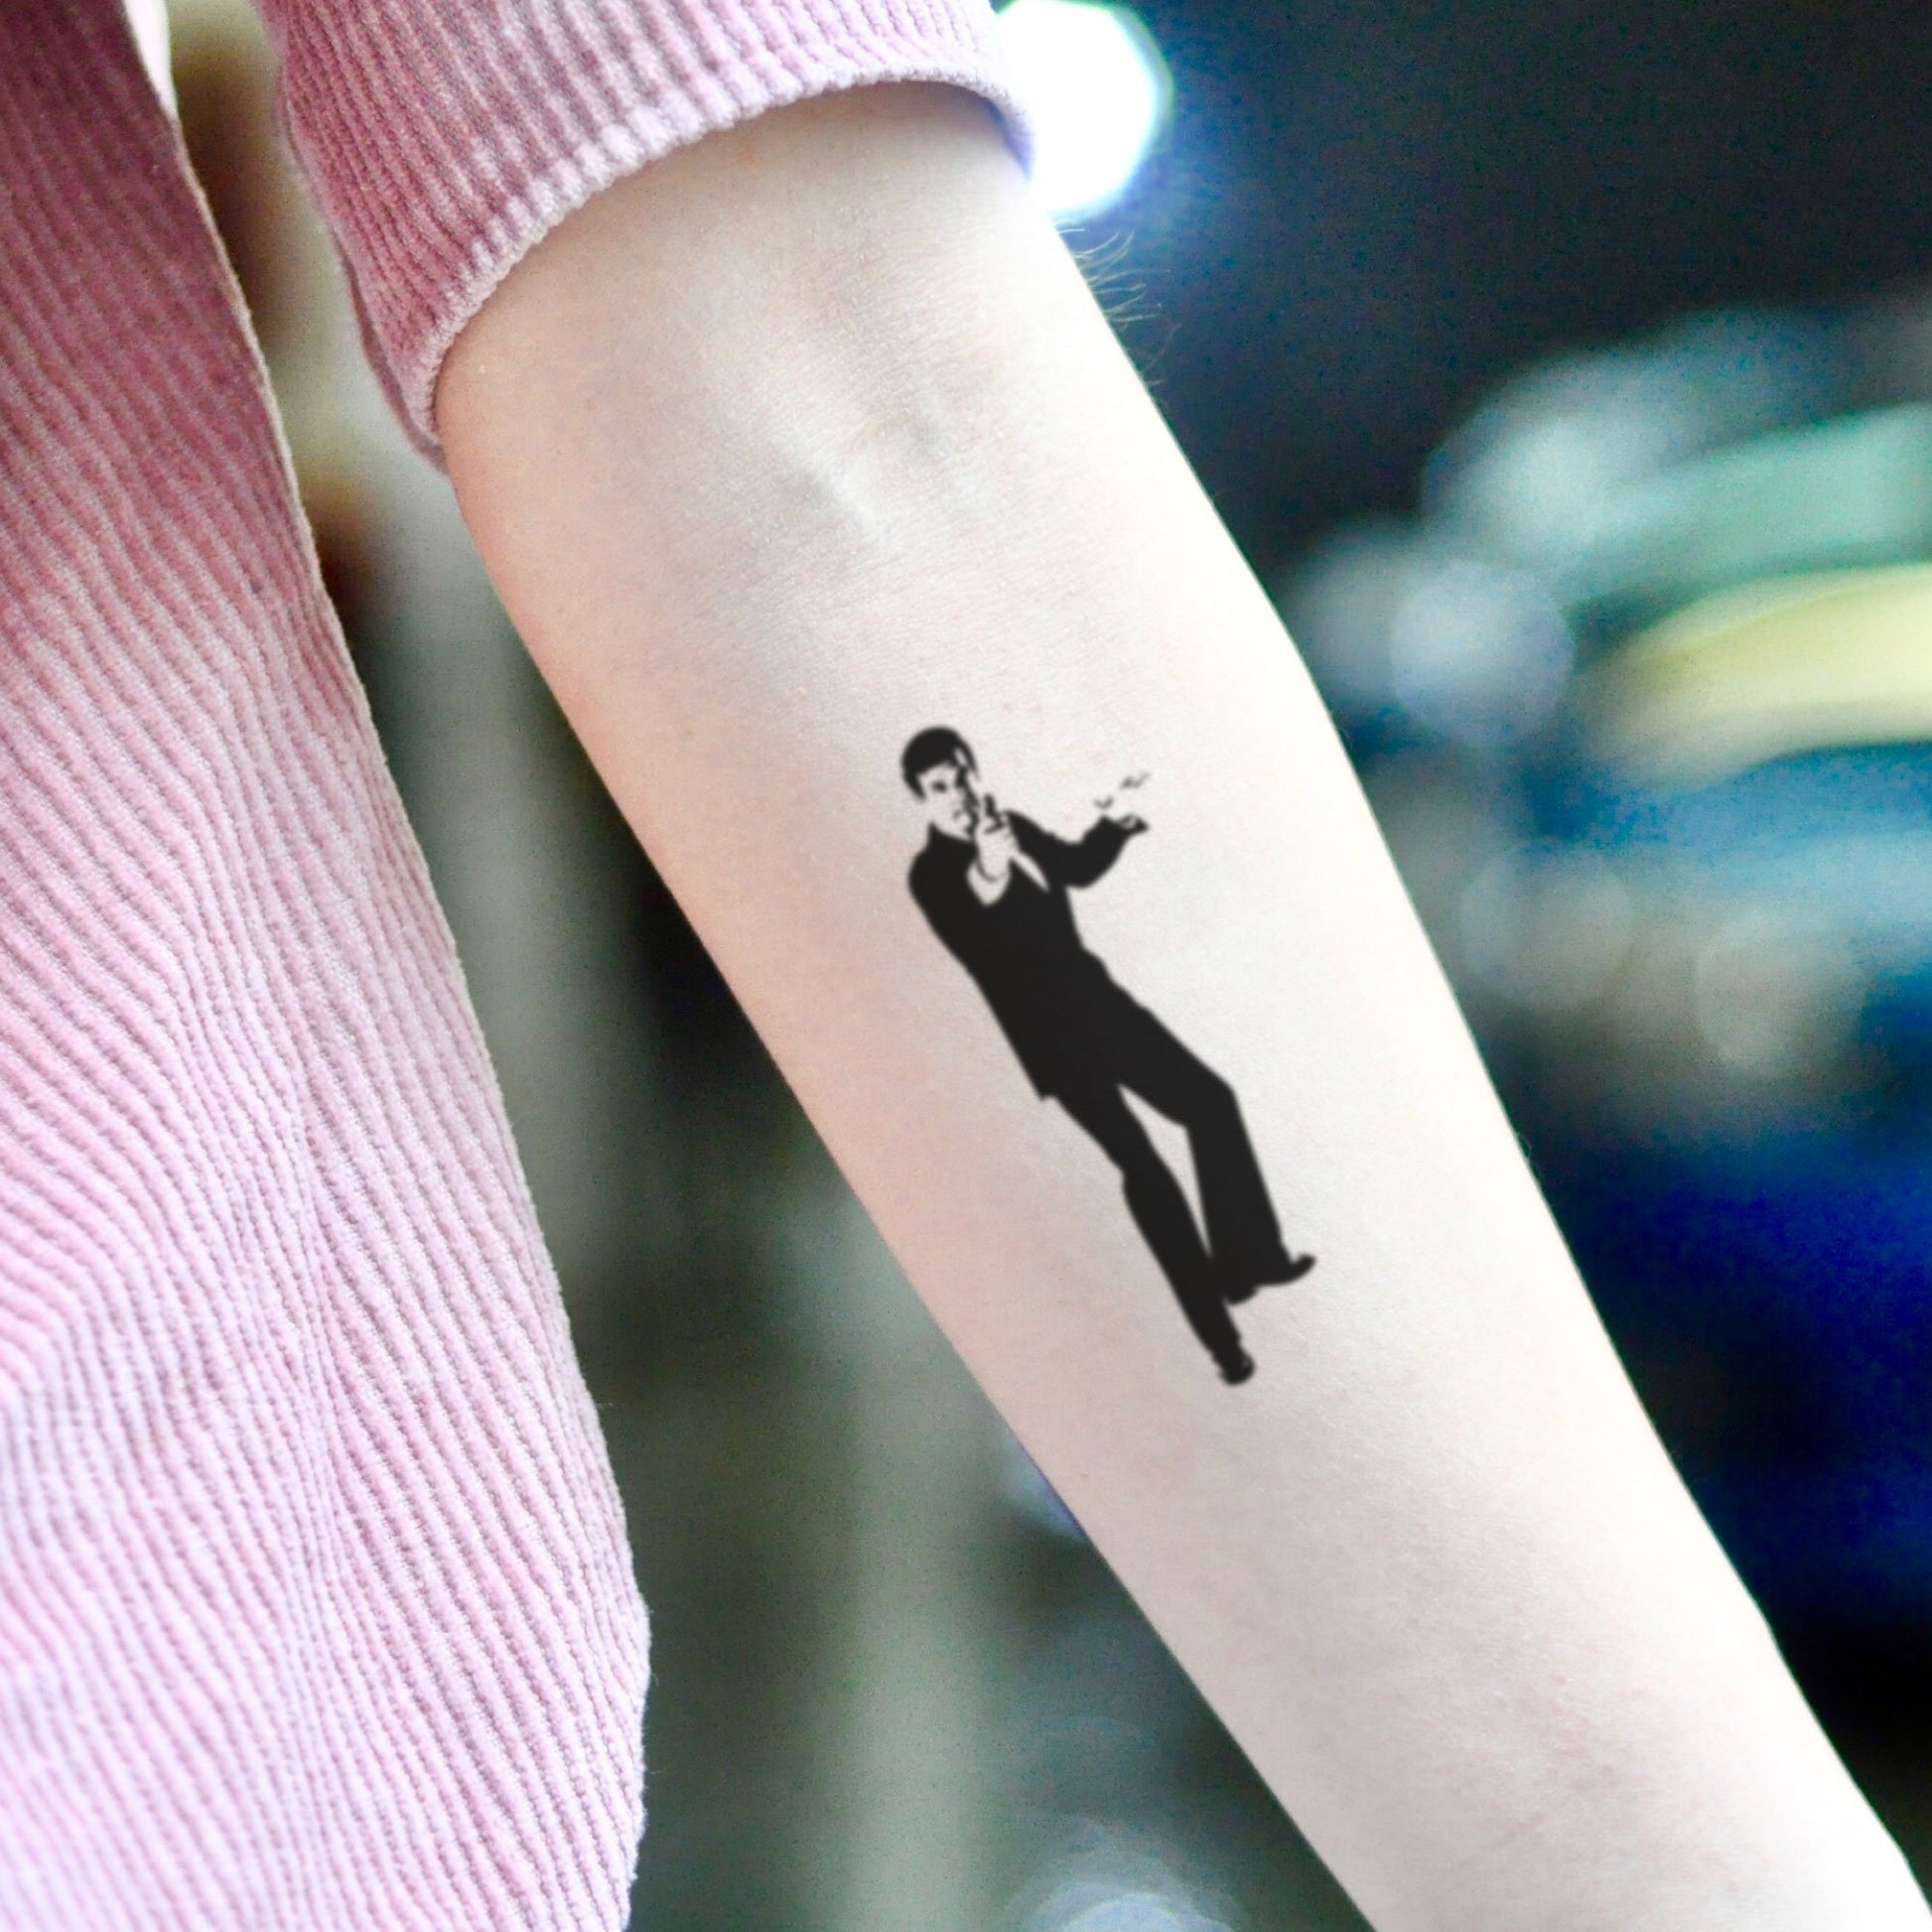 fake small james bond portrait temporary tattoo sticker design idea on inner arm